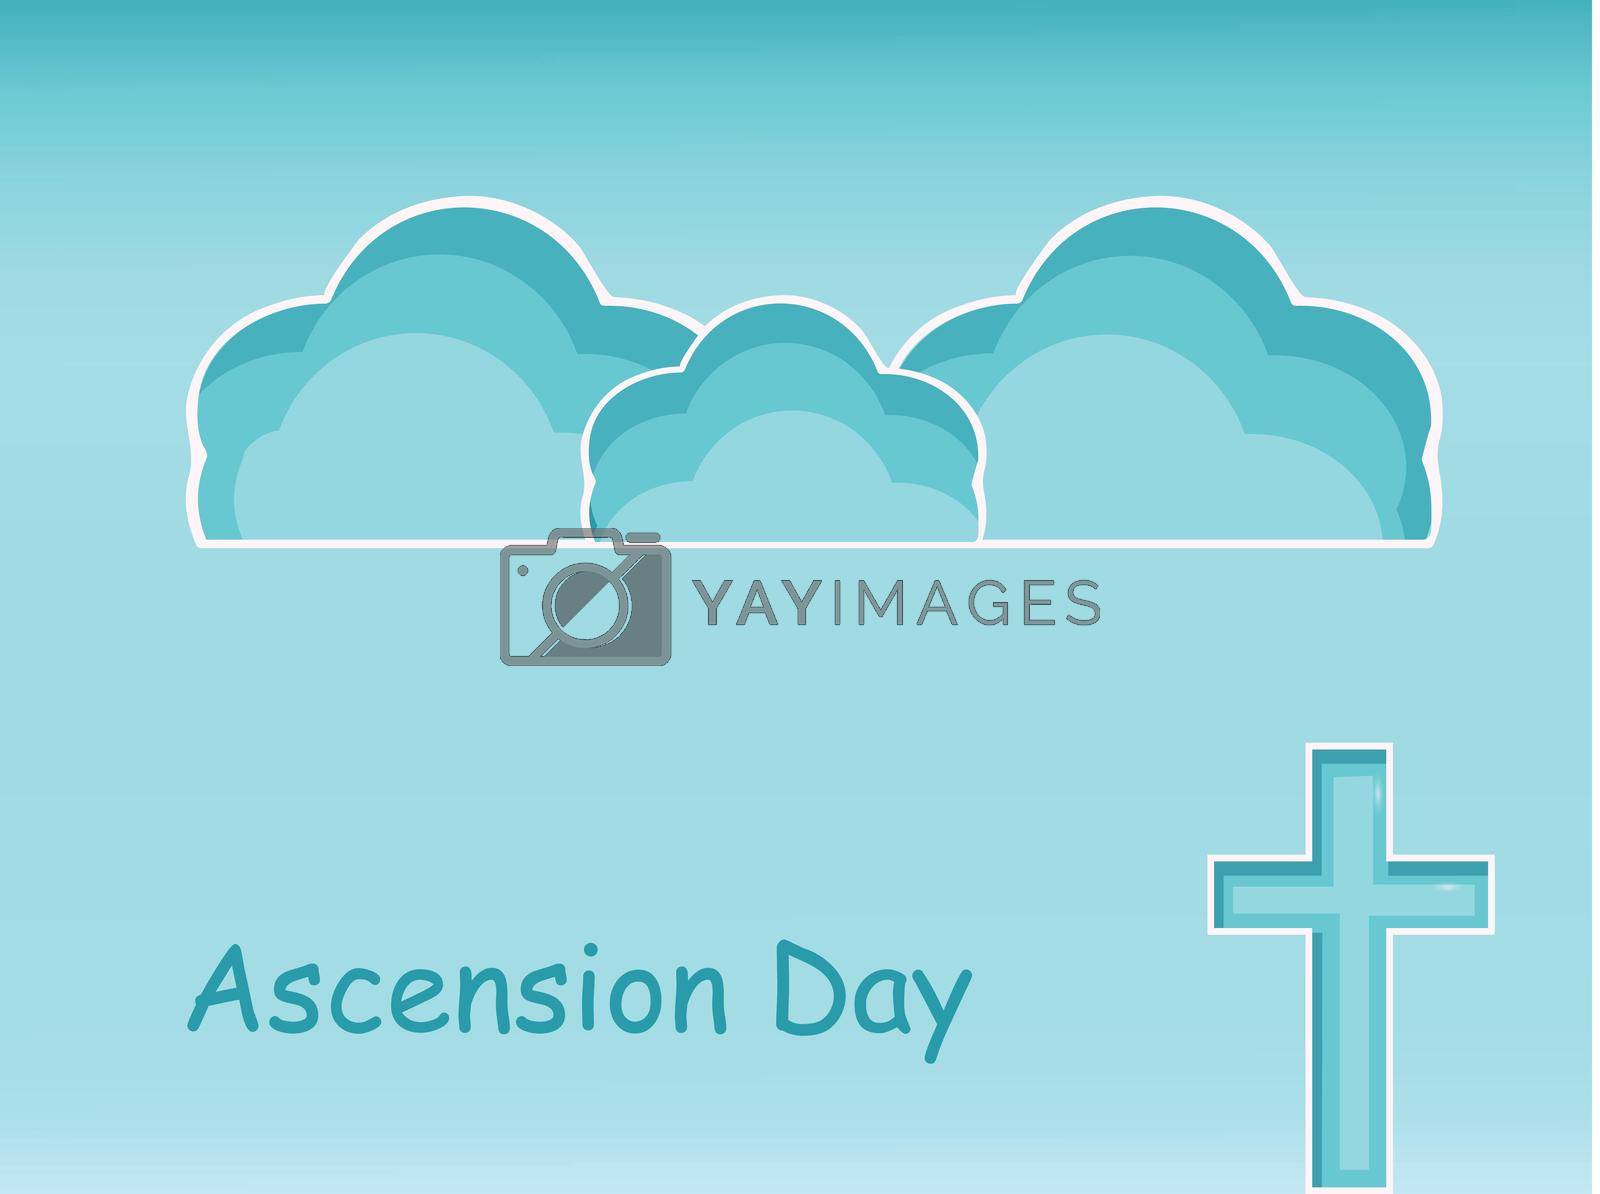 illustration of Christian festival Ascension Day background